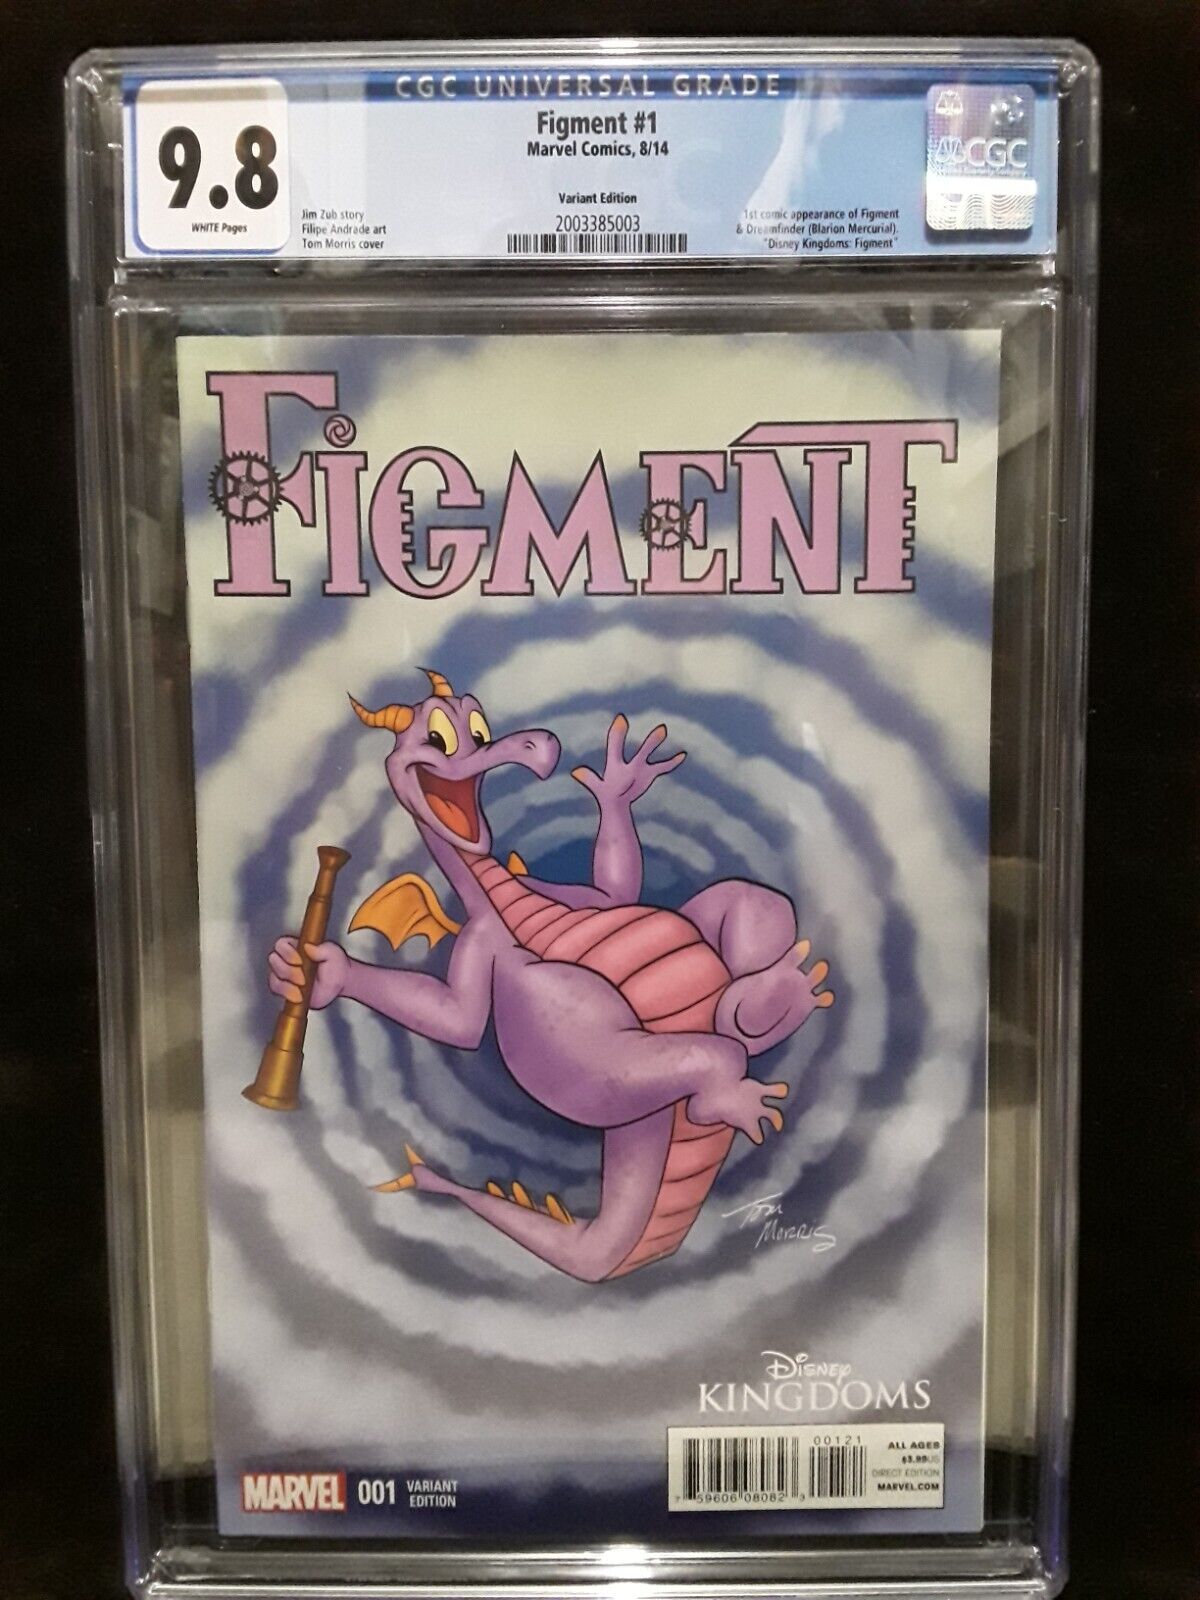 CGC 9.8 Figment # 1 1:25 Morris Variant 1st Appearance of Figment Disney Kingdom